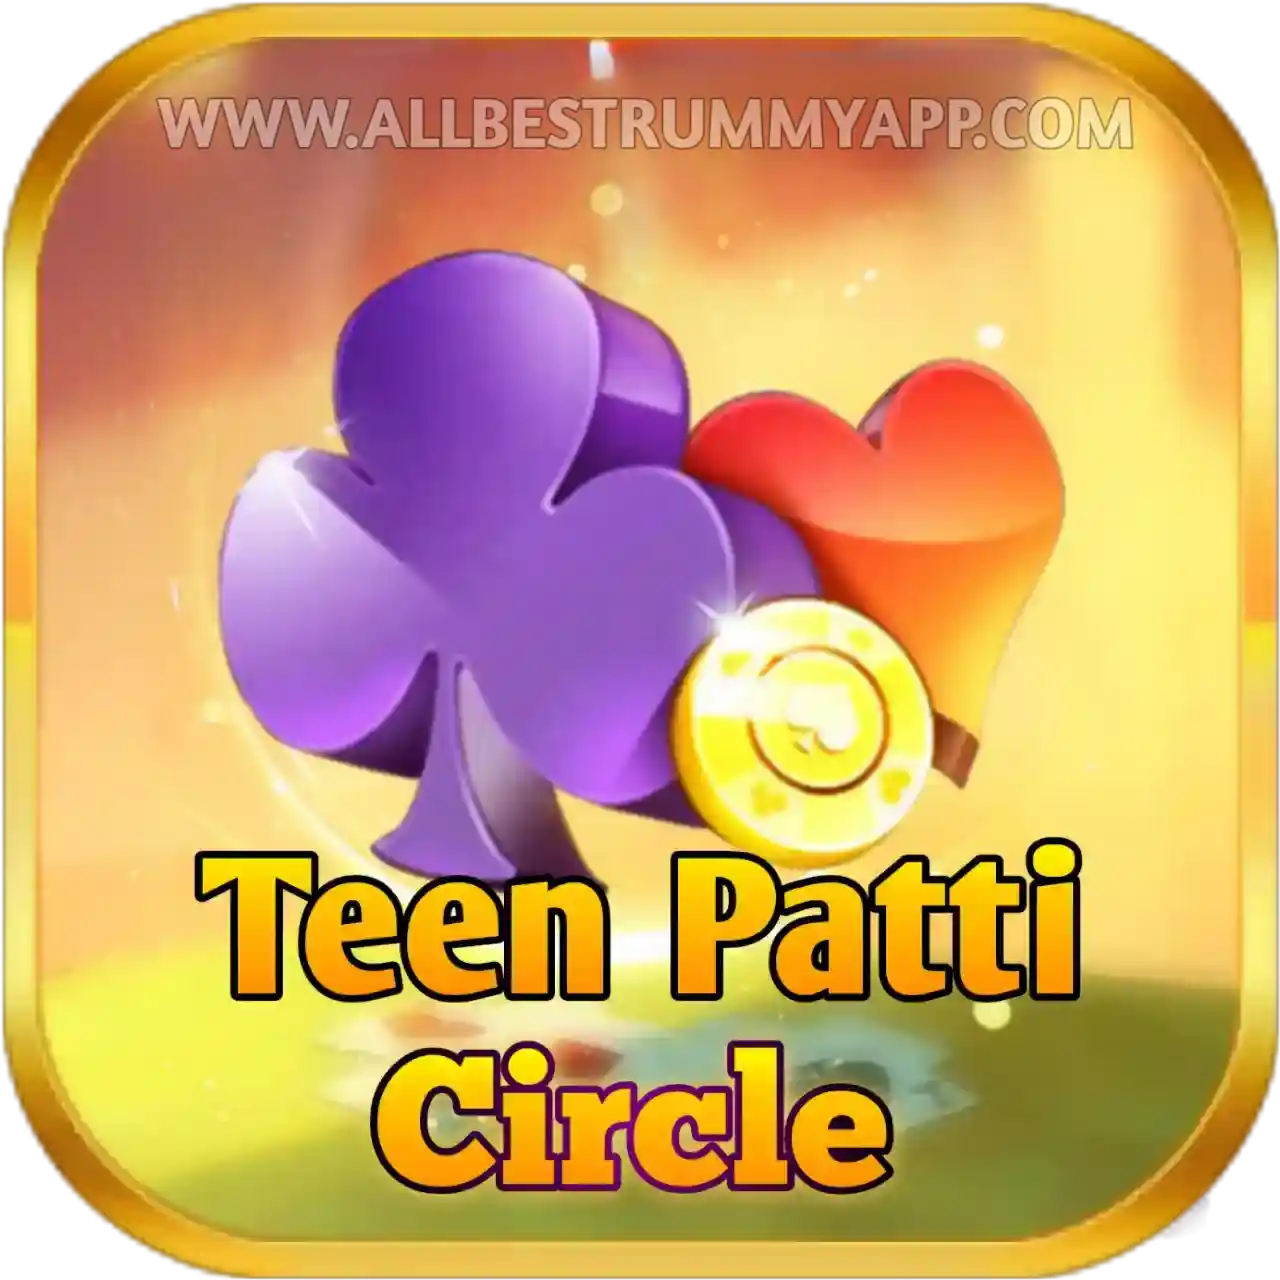 Teen Patti Circle Logo - All Best Rummy App